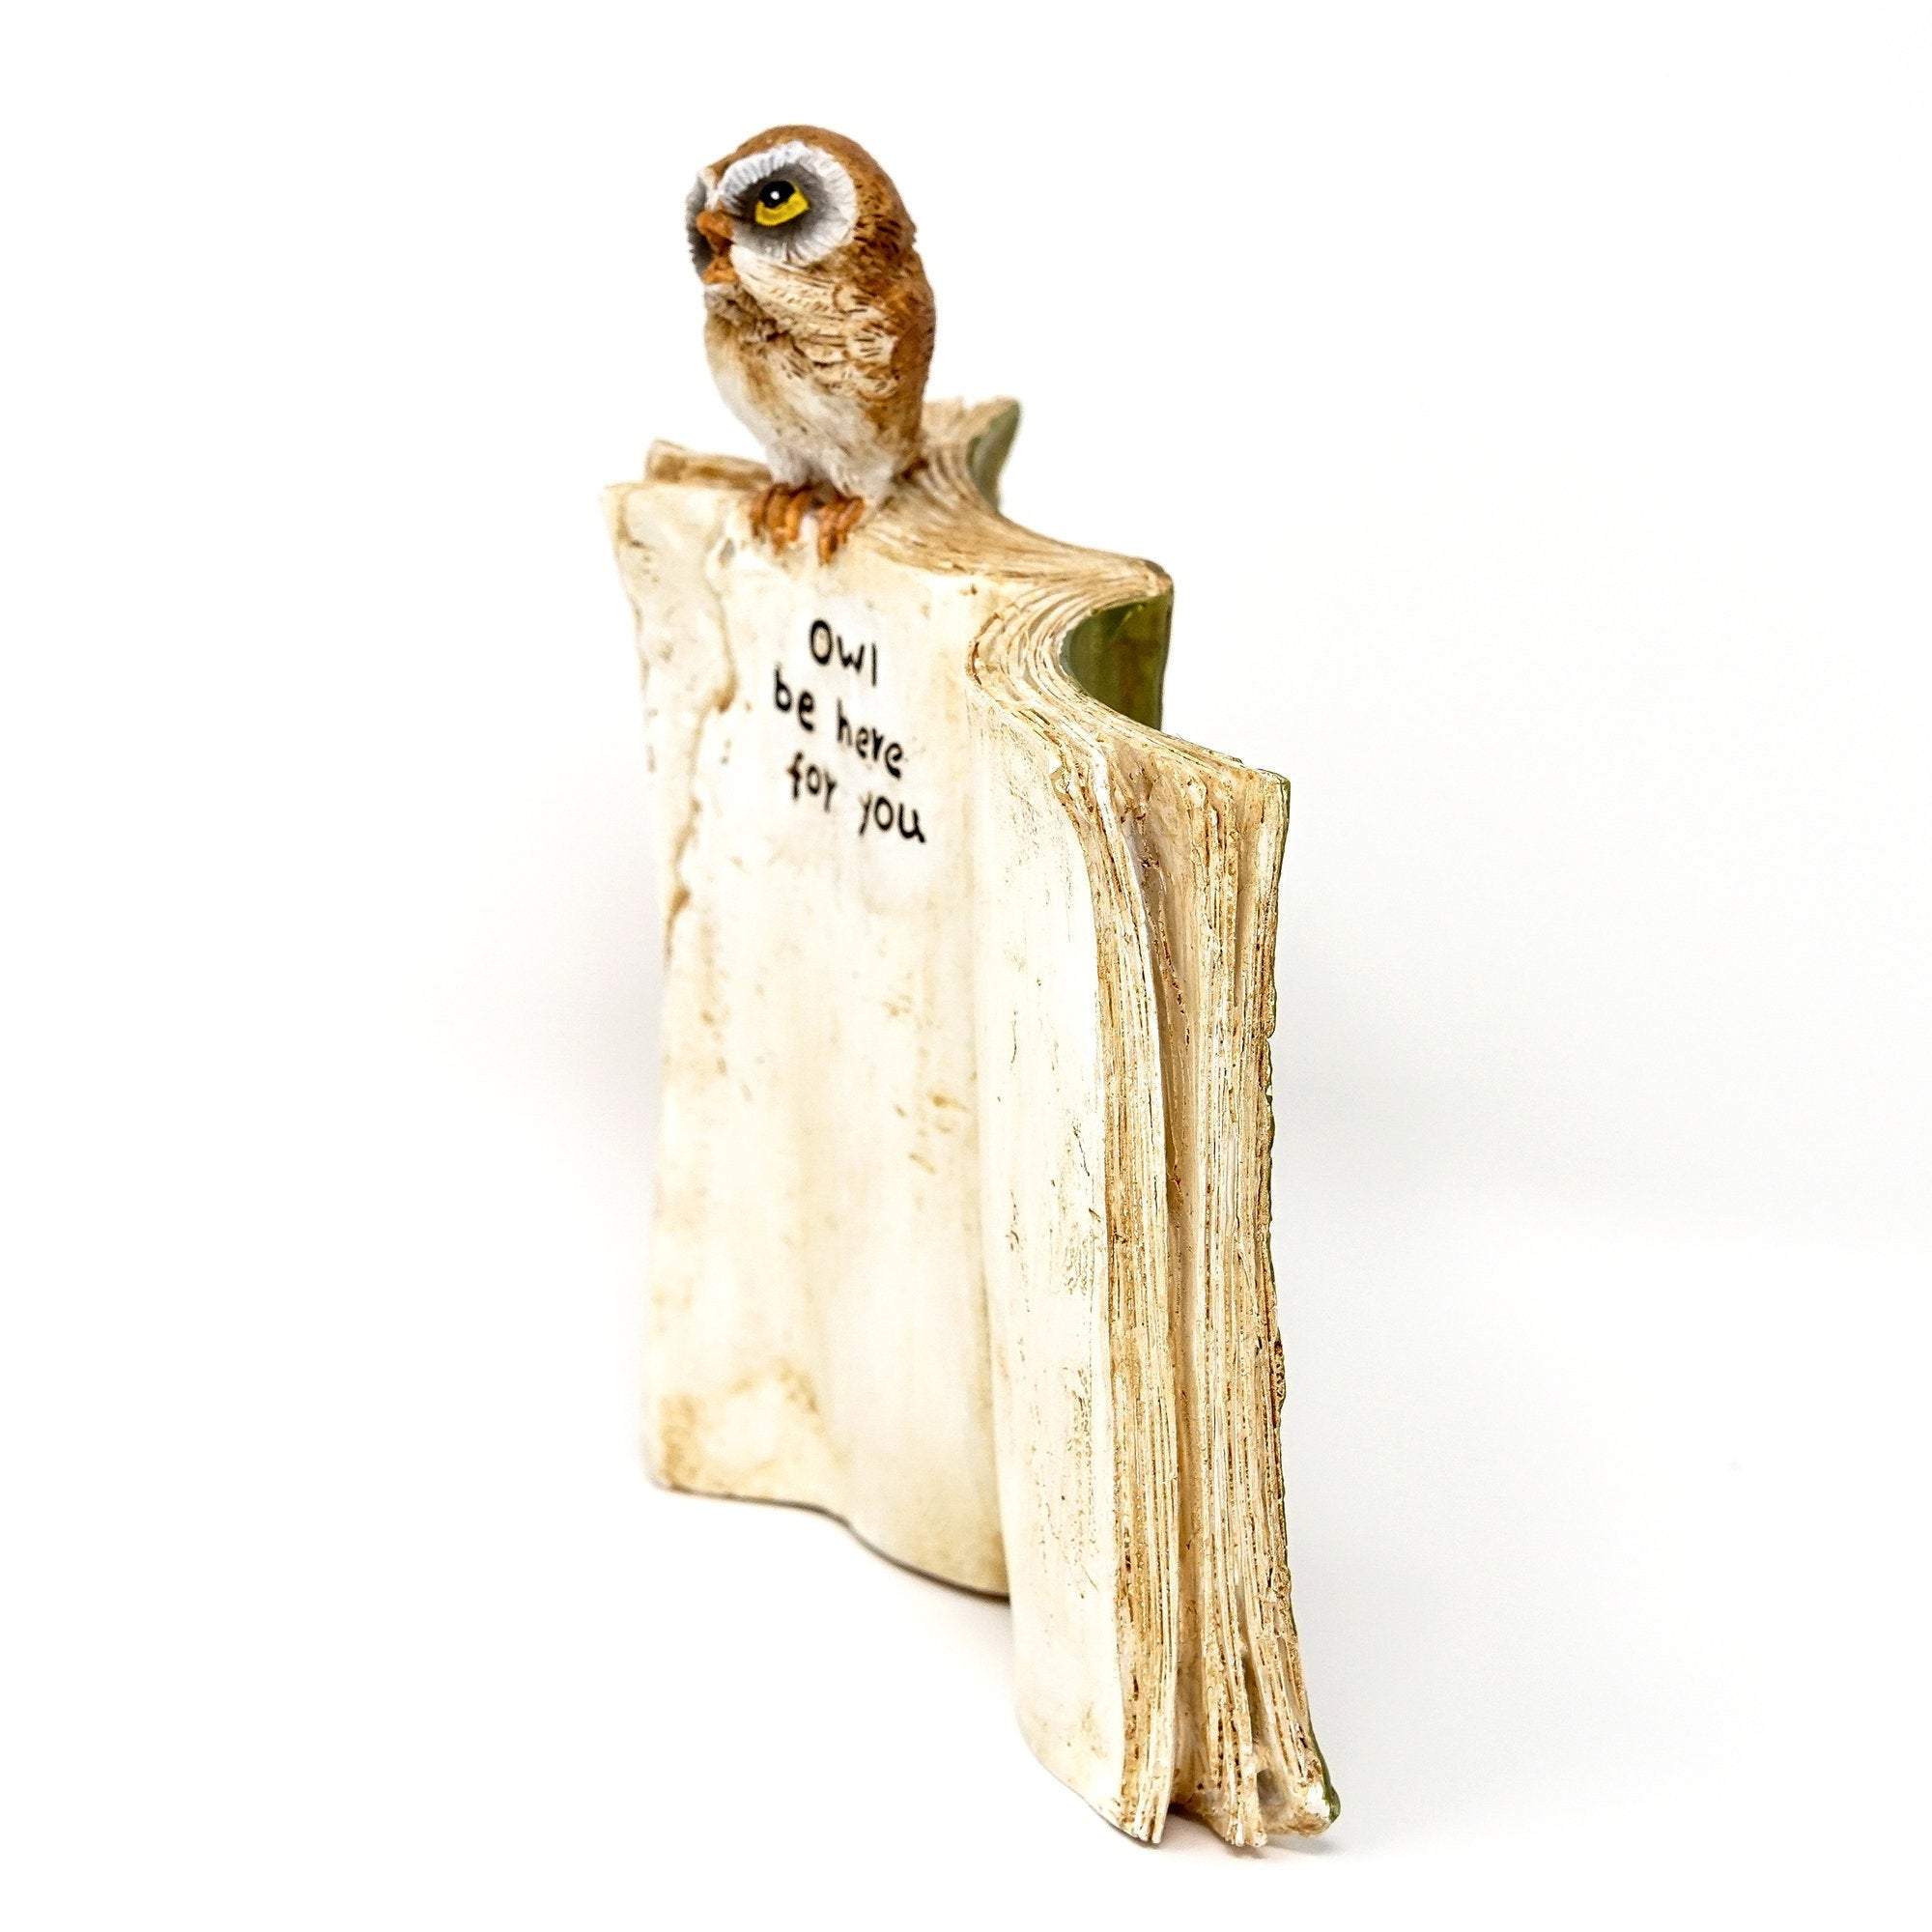 Owl Be Here For You - Book with Owl, Fairy Garden, Mini Owl, Owl Reading, Miniature Owl - Mini Fairy Garden World